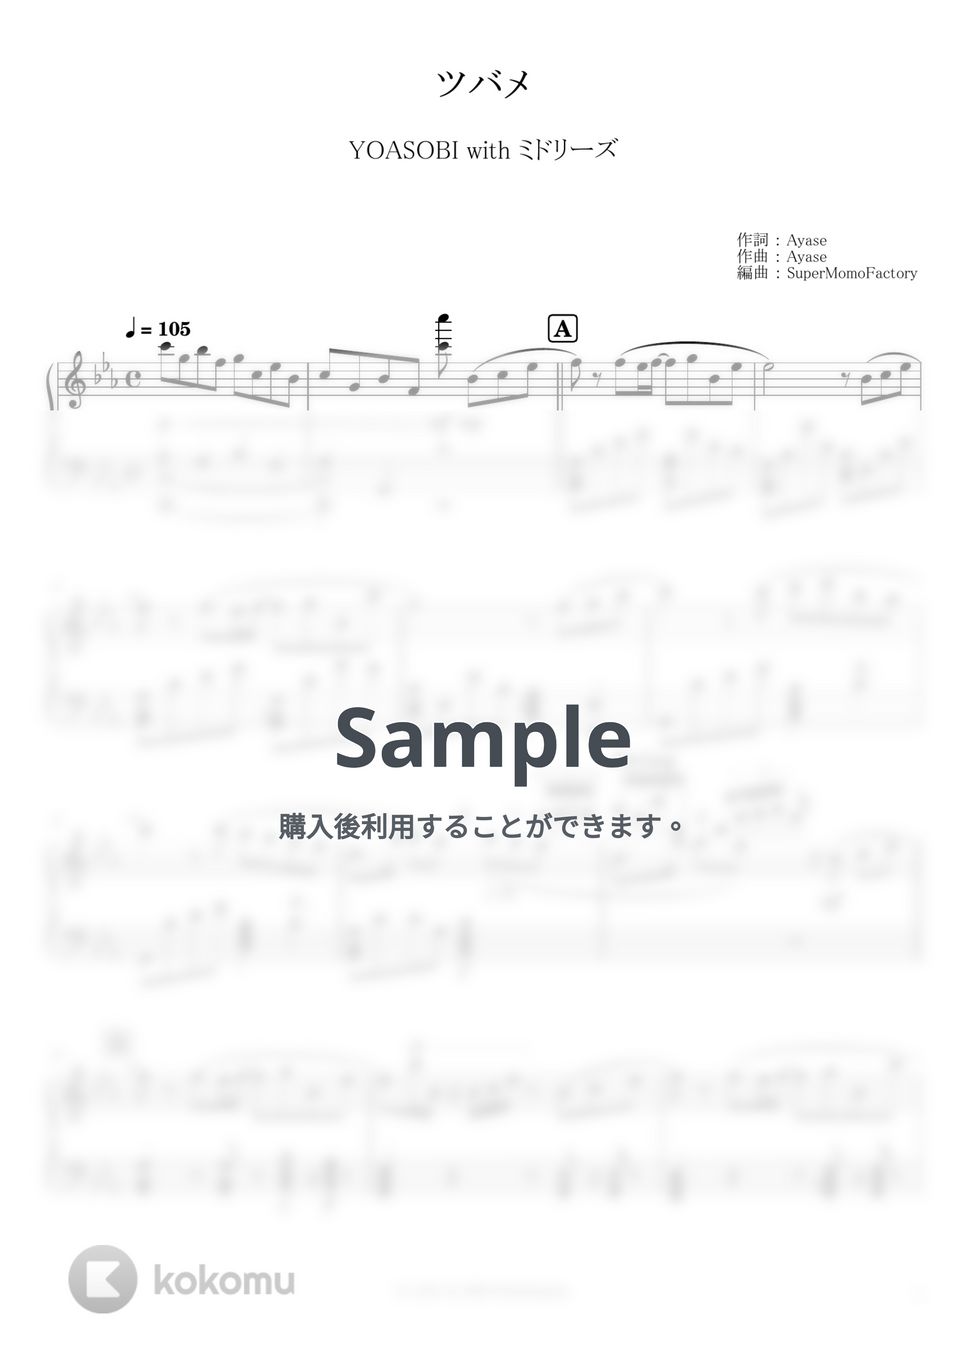 YOASOBI with ミドリーズ - ツバメ (ピアノソロ / 上級) by SuperMomoFactory